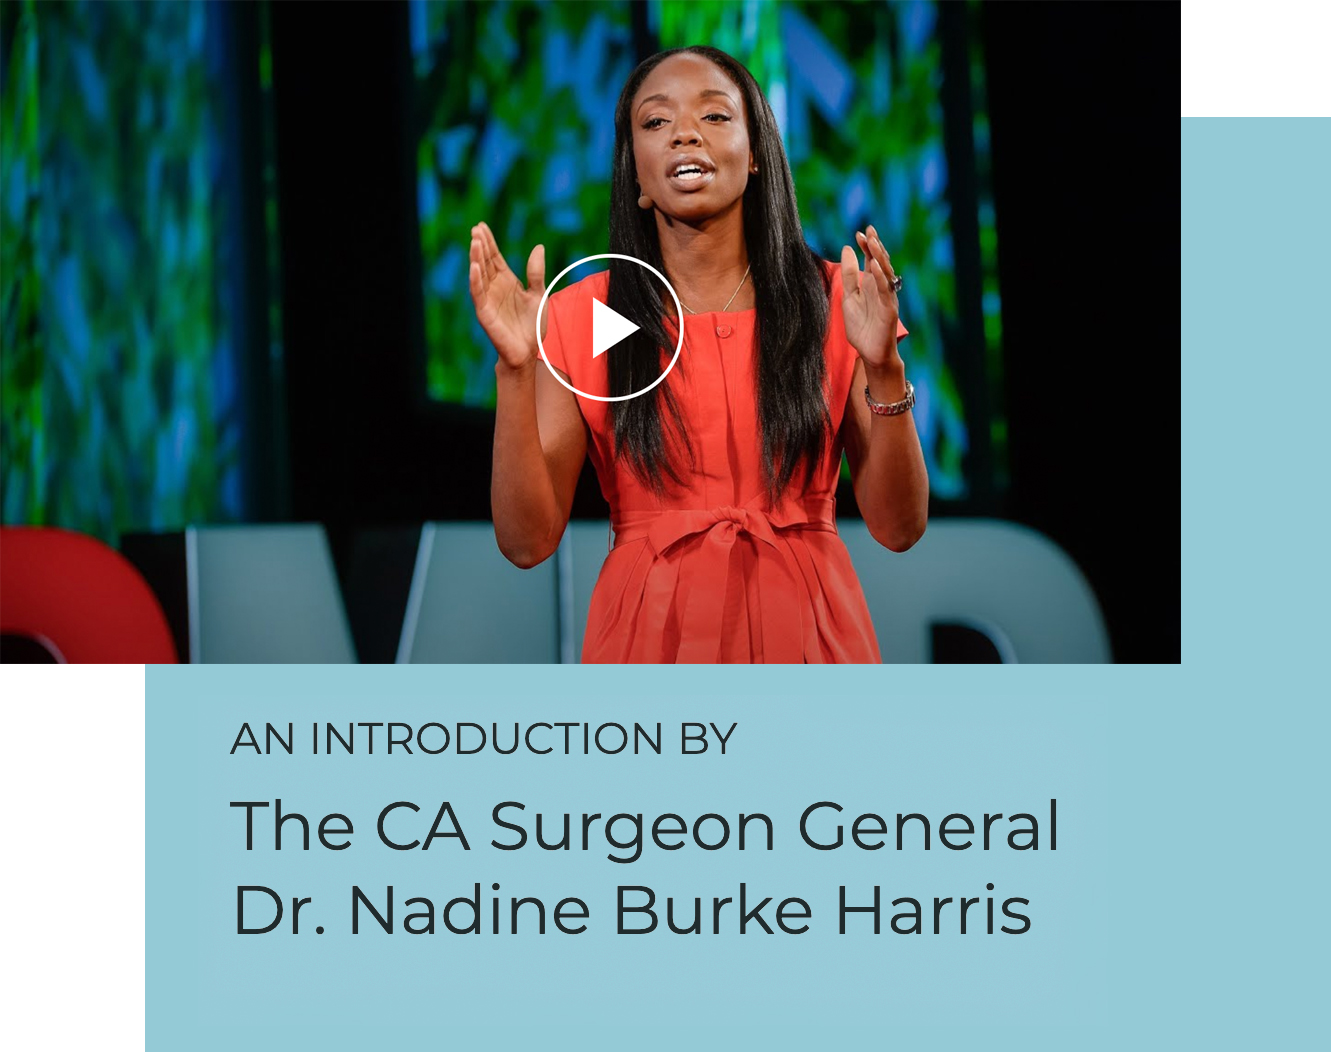 Dr Nadine Burke